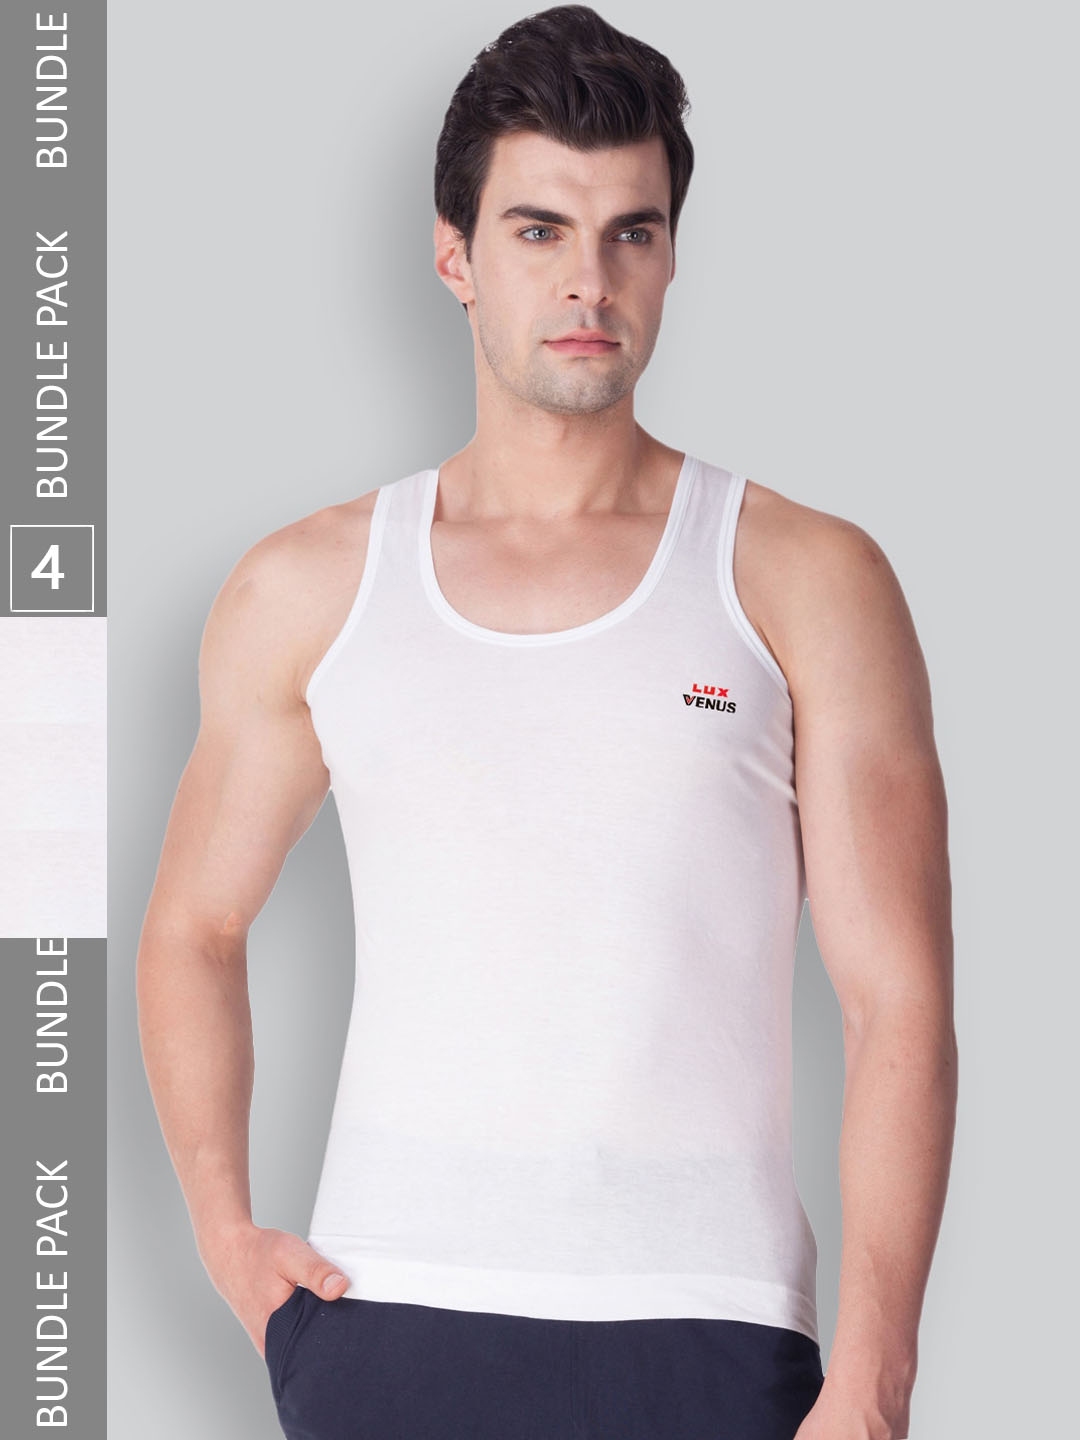 Buy RAMRAJ COTTON Men Pure Cotton Solid Innerwear Vests Pack of 5